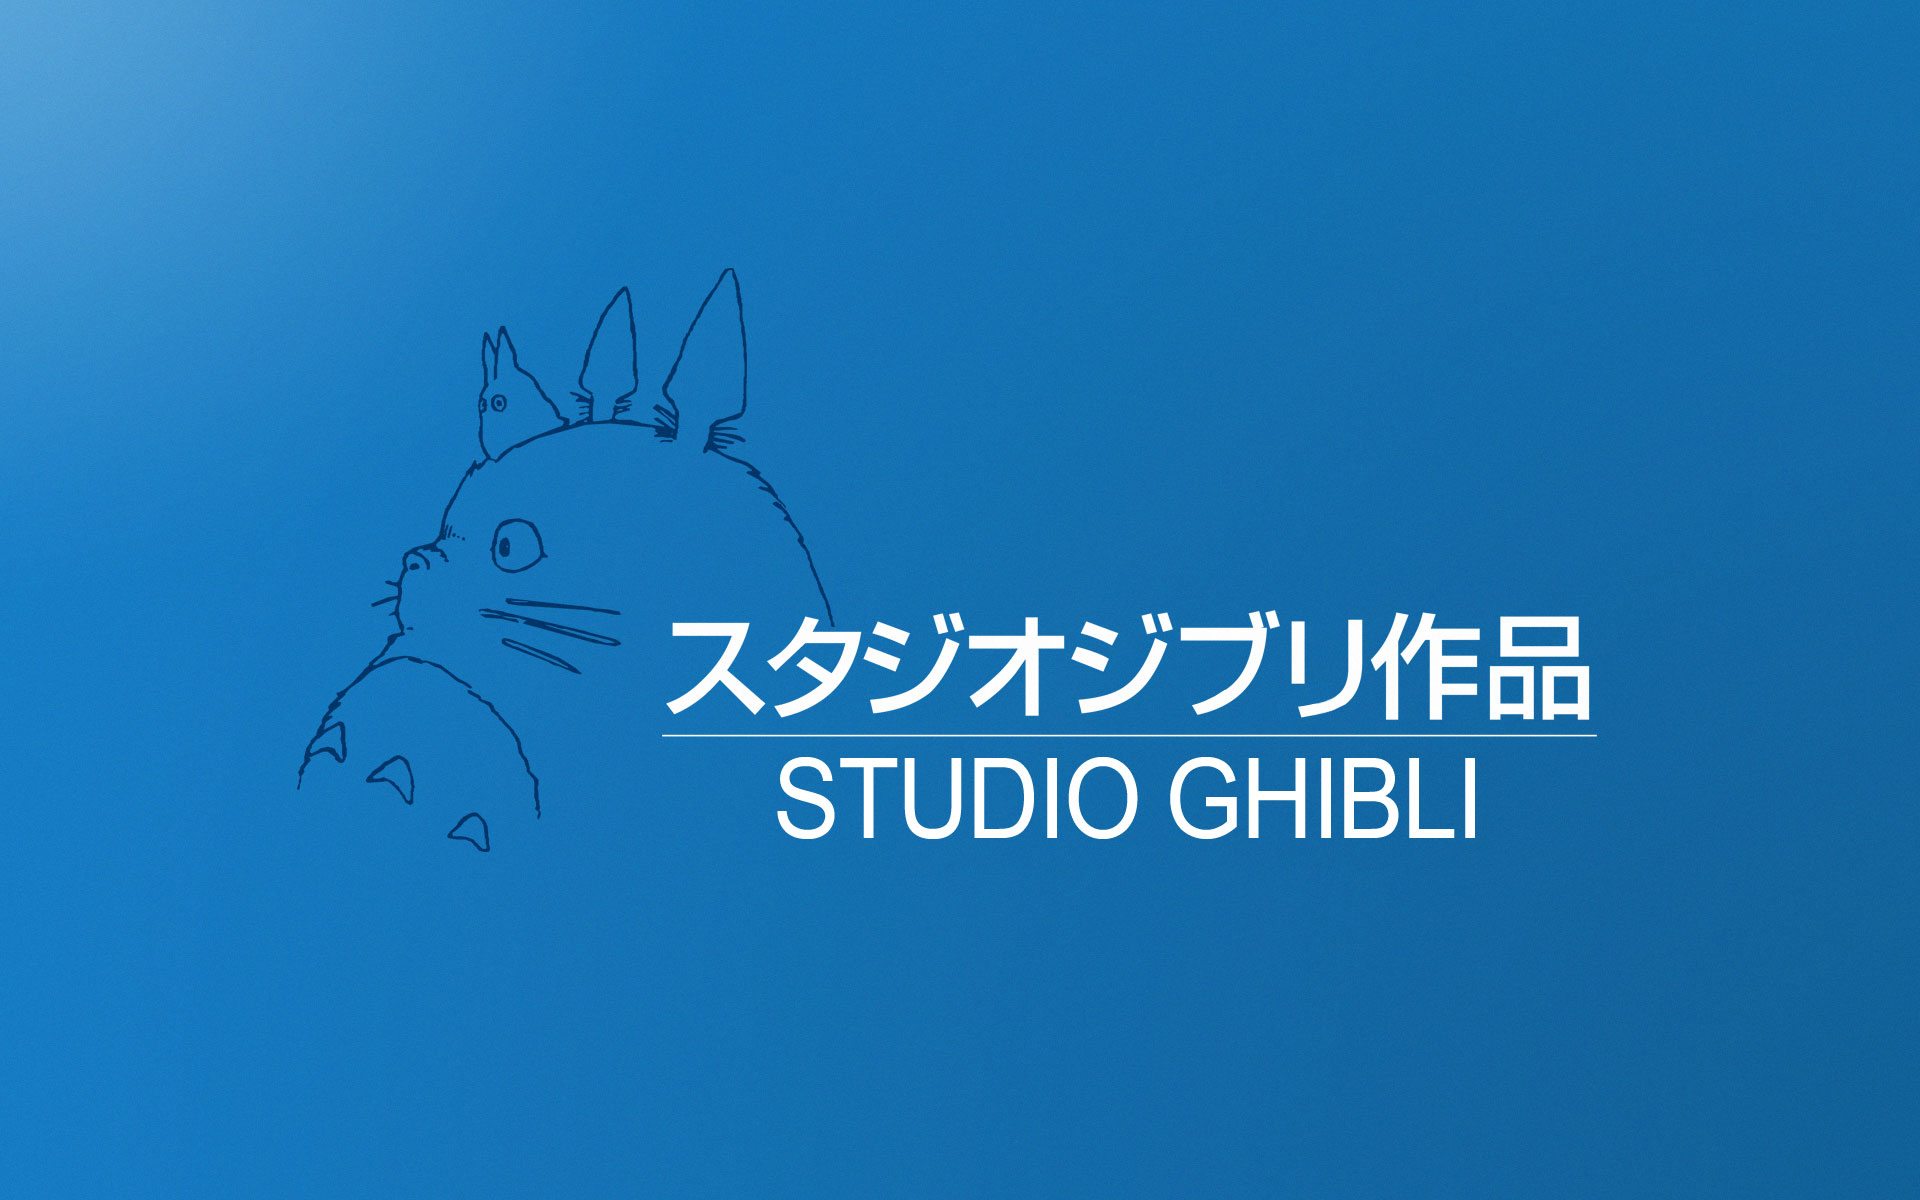 This production company is co-founded by Hayao Miyazaki and Isao Takahata